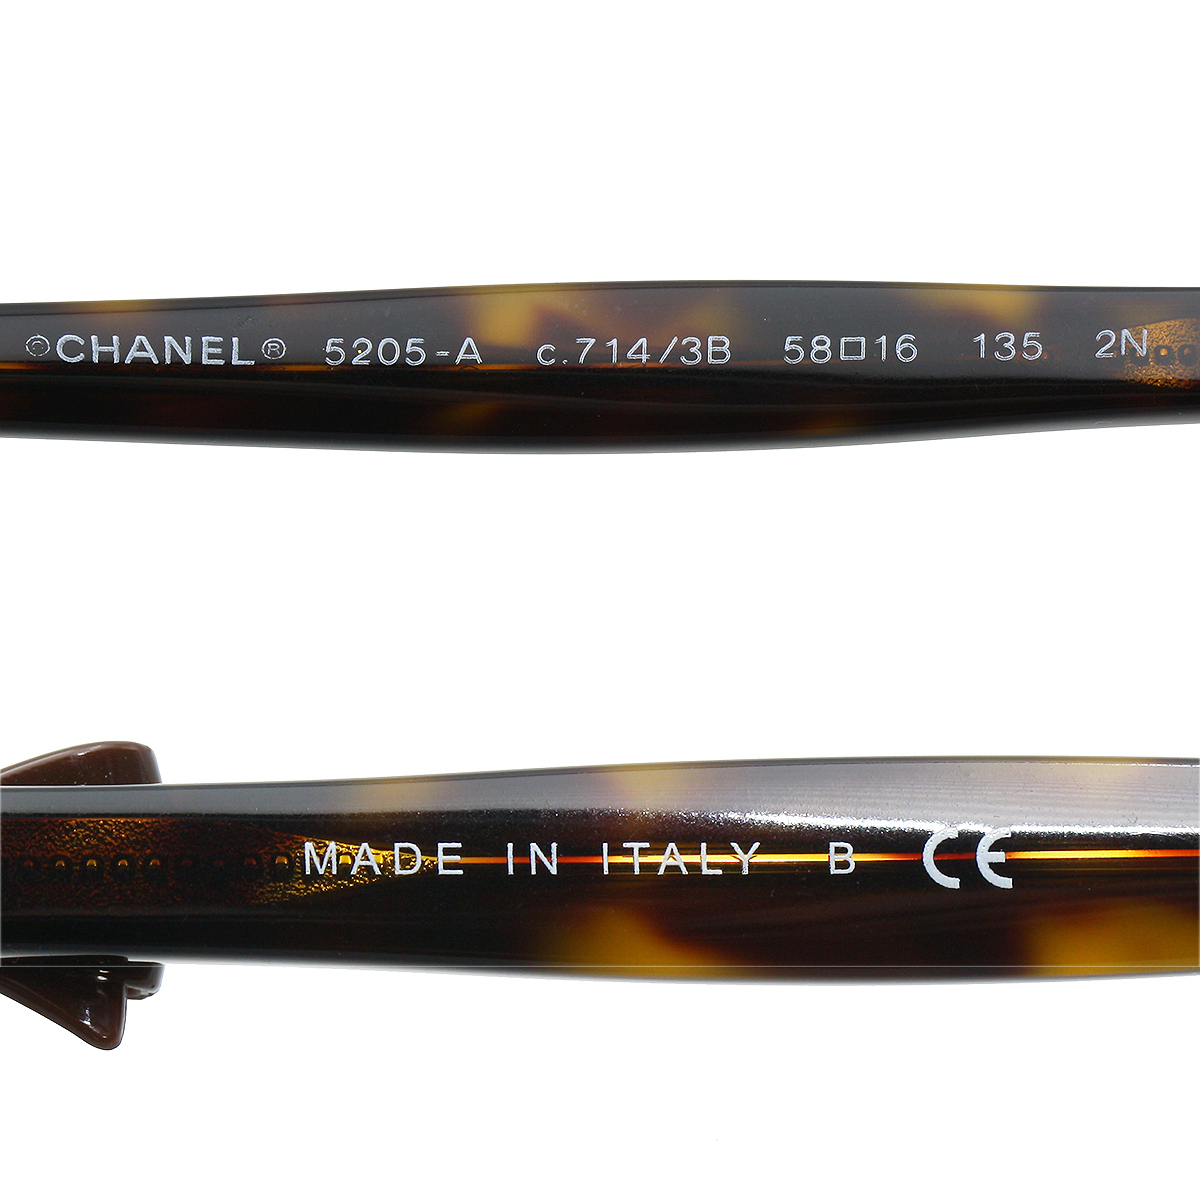 *T1769 beautiful goods!! Chanel here Mark ribbon sunglasses 58*16 135 dark brown CHANEL lady's *